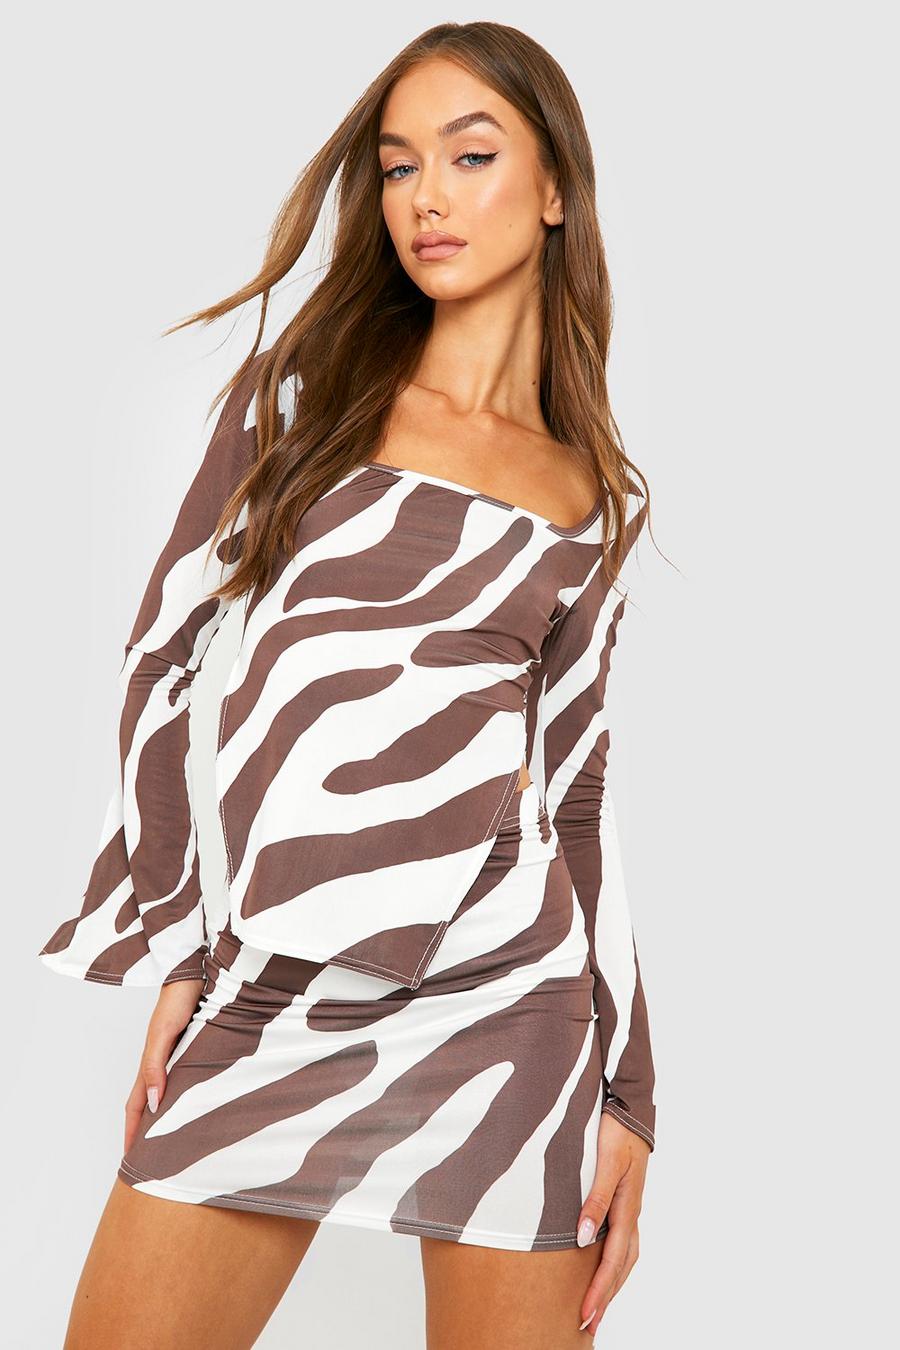 Chocolate brown Zebra Print Mini Skirt